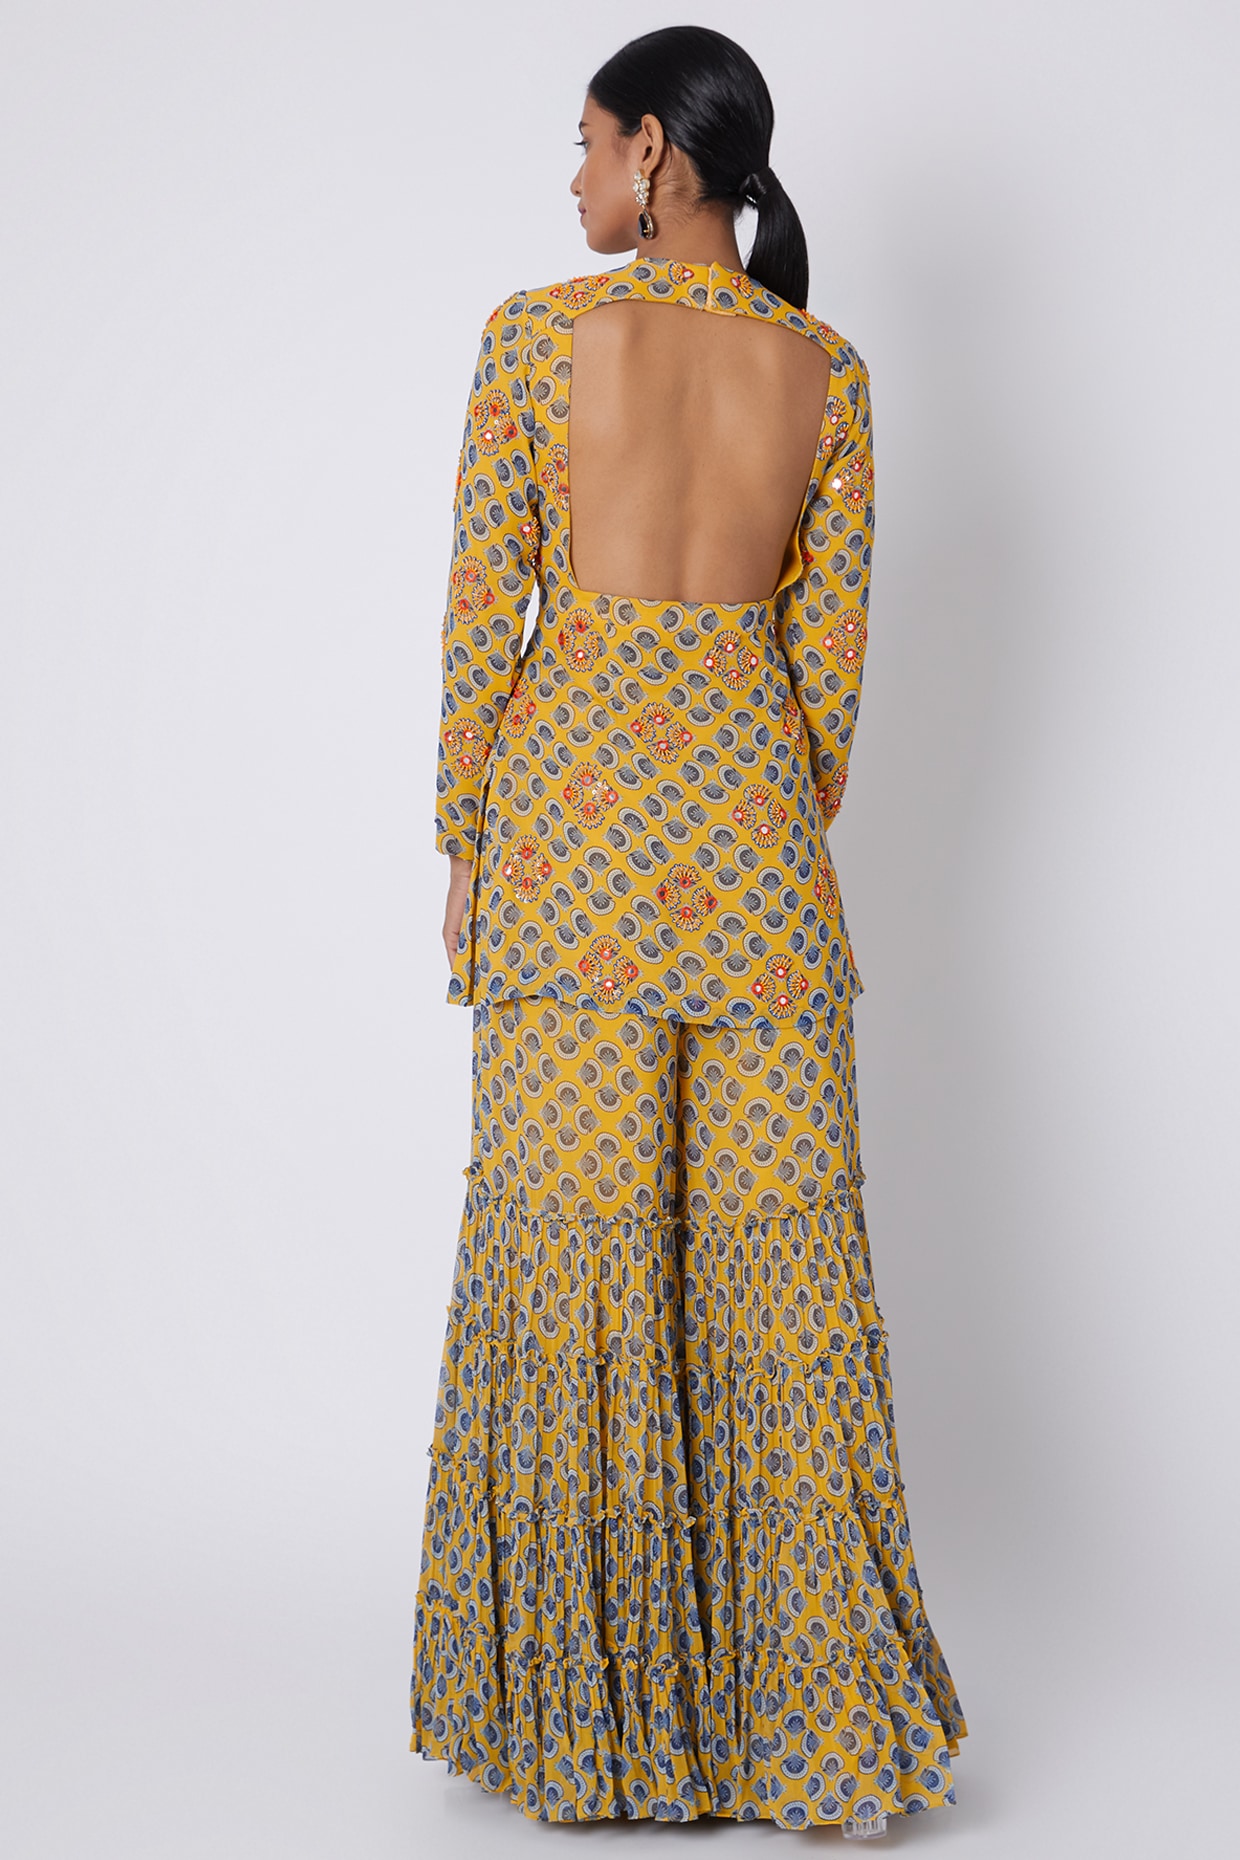 Yellow Sharara: Buy Latest Yellow Sharara Suits and Dresses Online - Kalki  Fashion